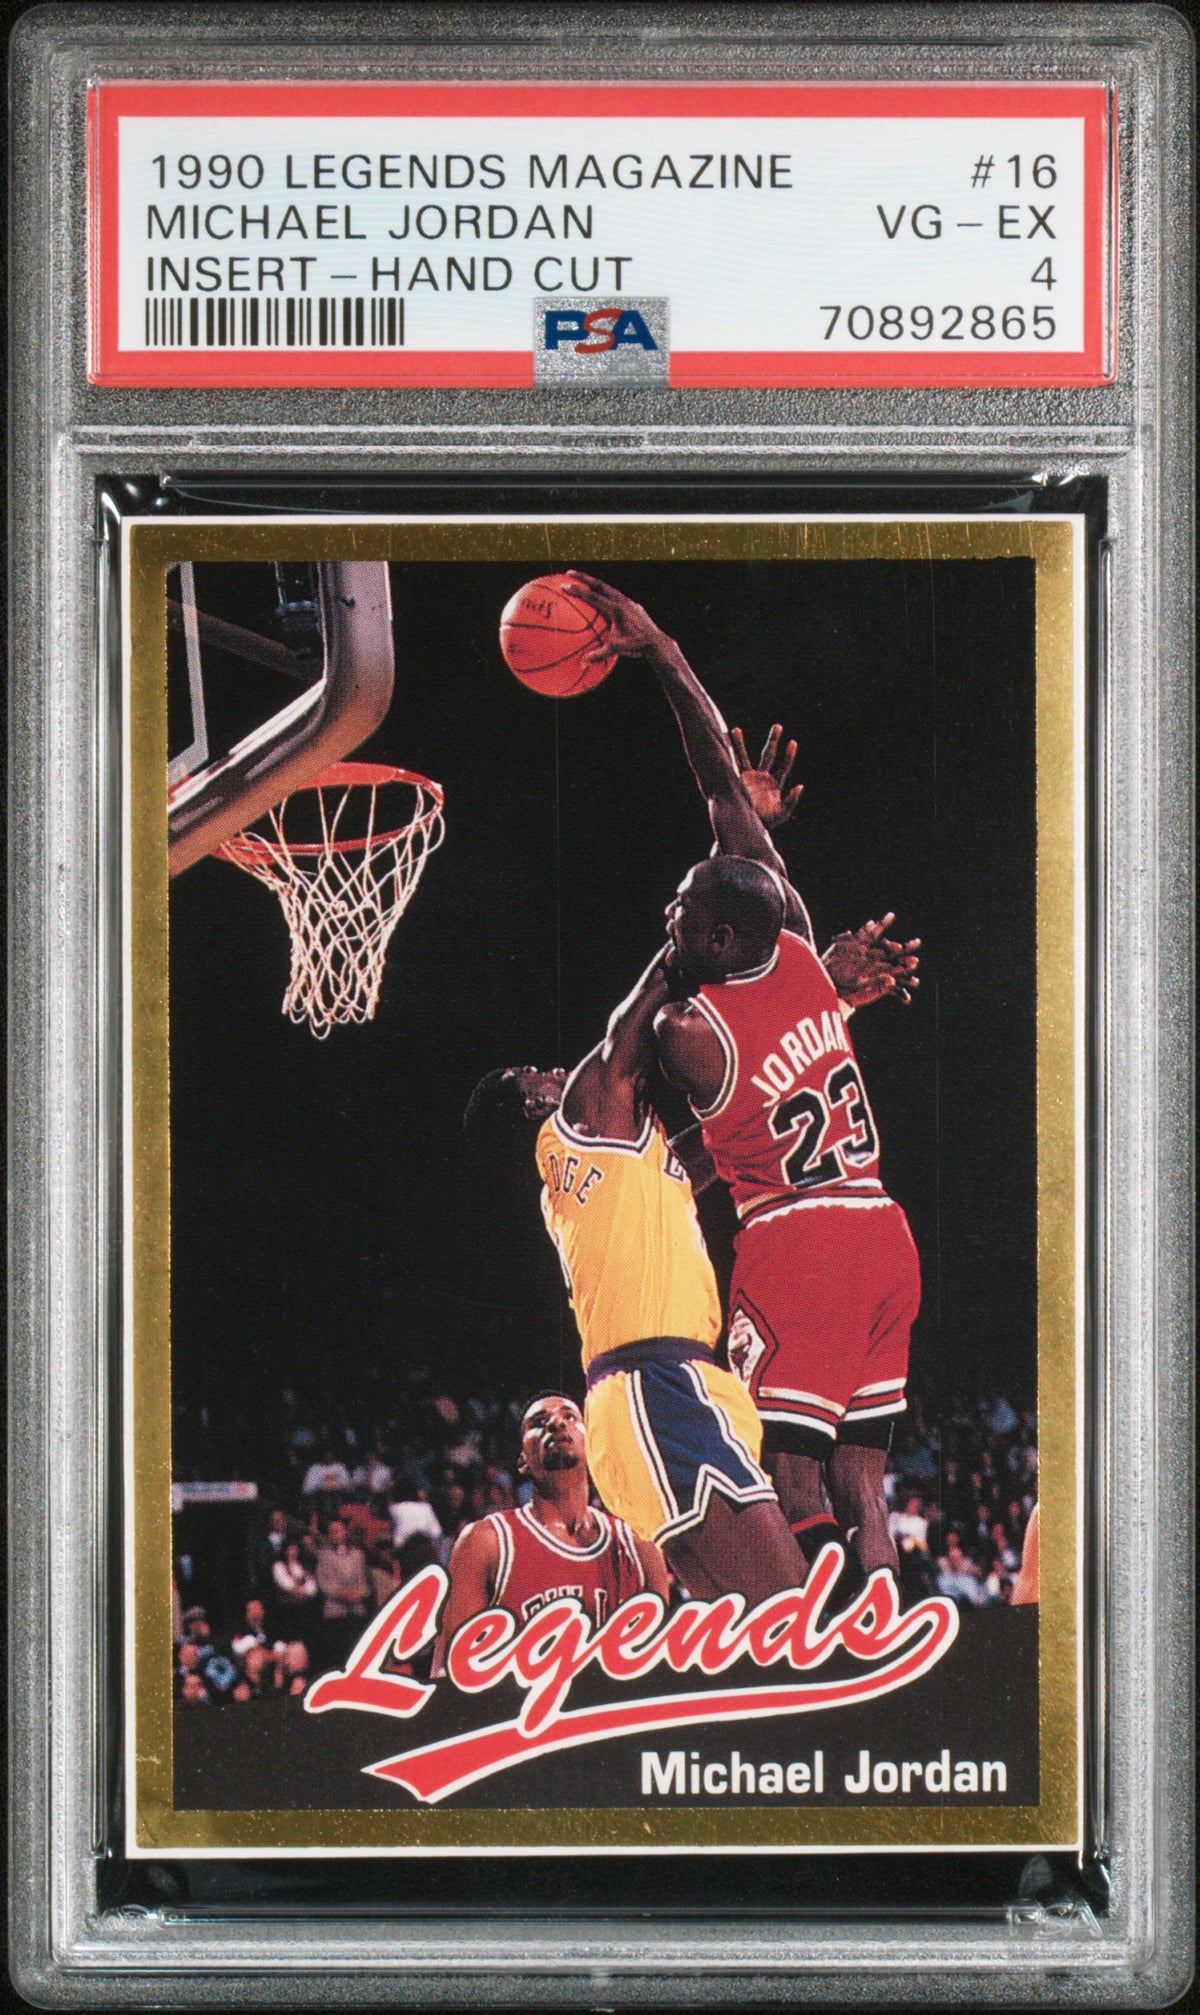 Michael Jordan 1990 Legends Magazine Insert Hand Cut Card #16 Graded P